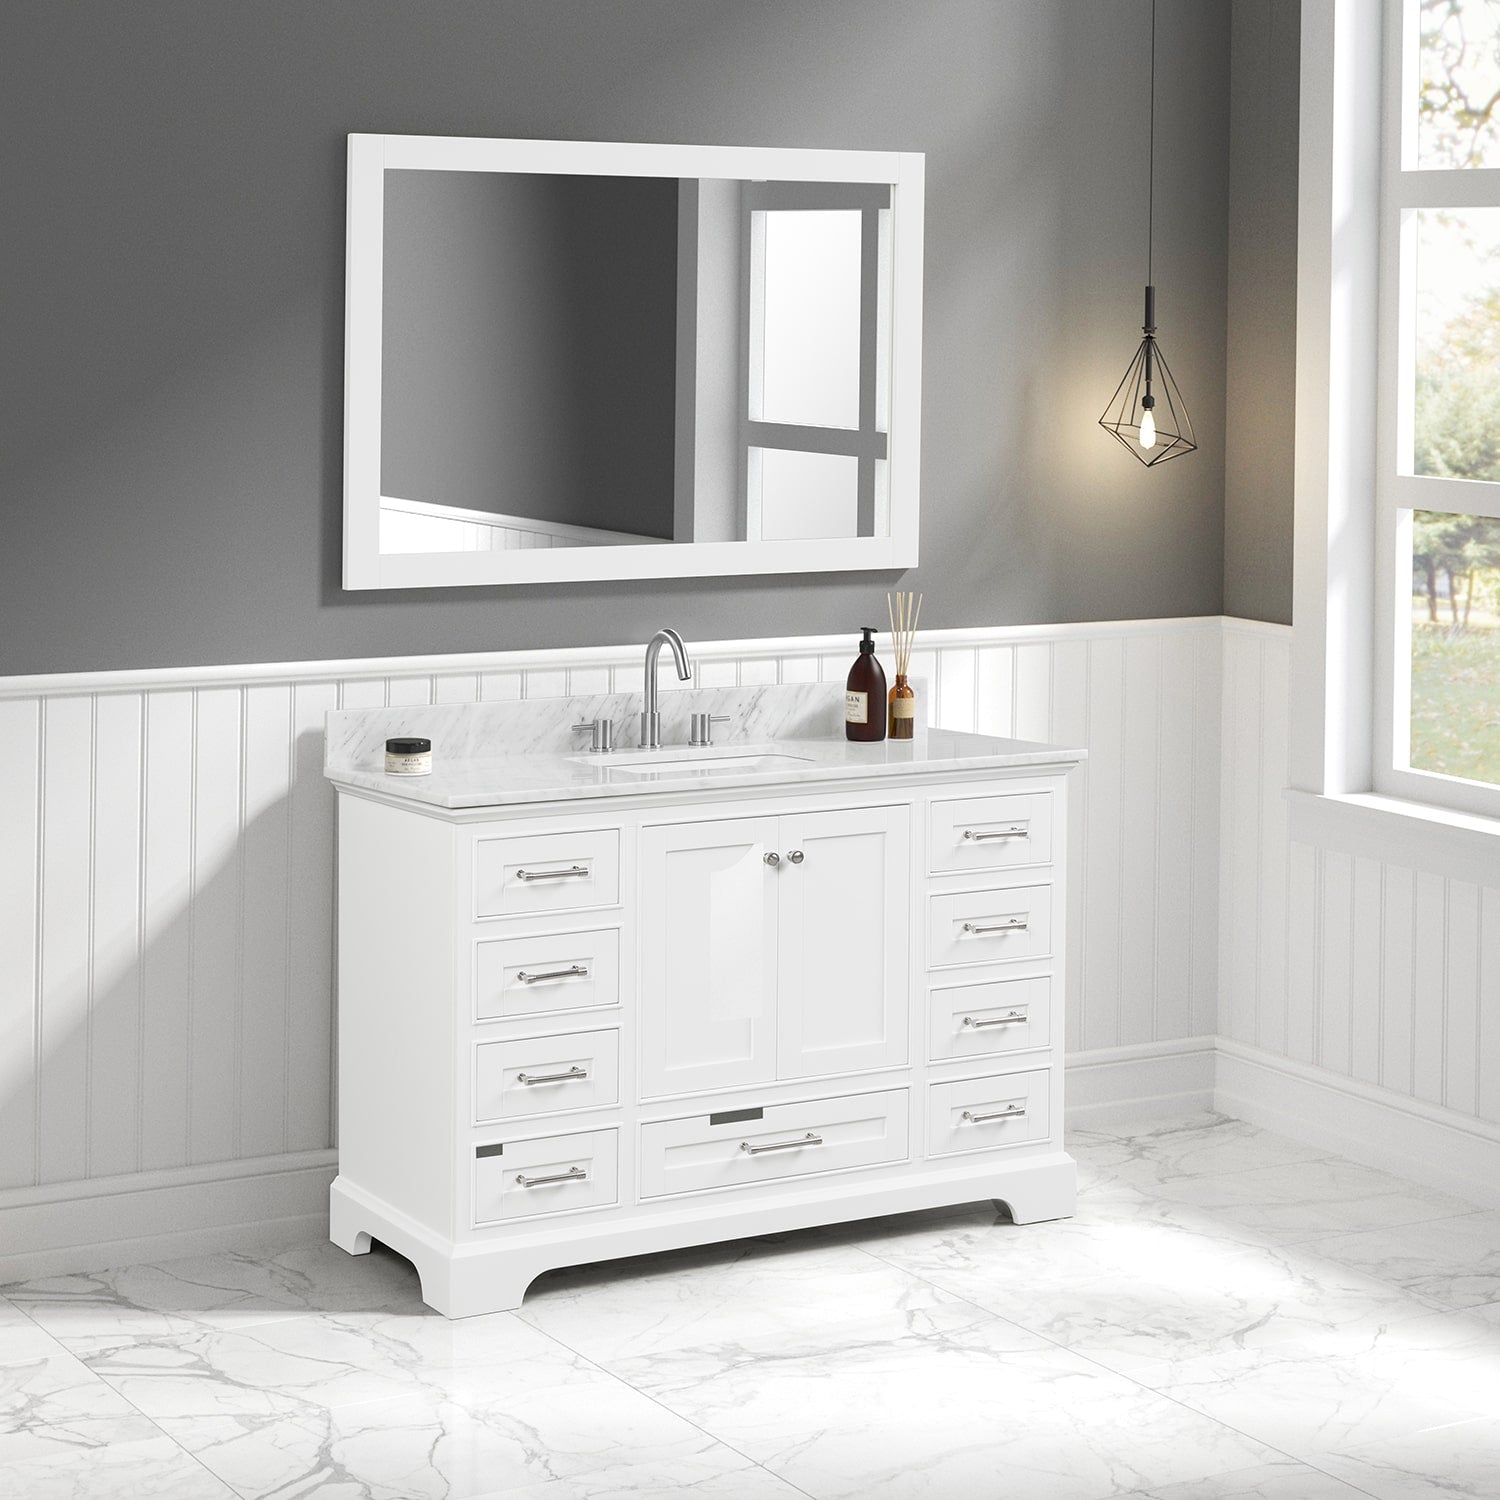 Copenhagen 48″ Vanity with Marble Countertop - Contemporary Bathroom Vanity